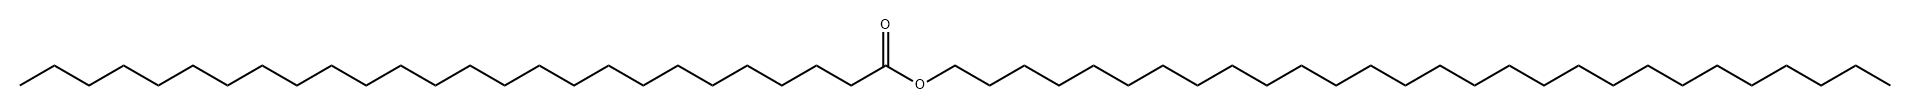 Hexacosanoic acid octacosyl ester|